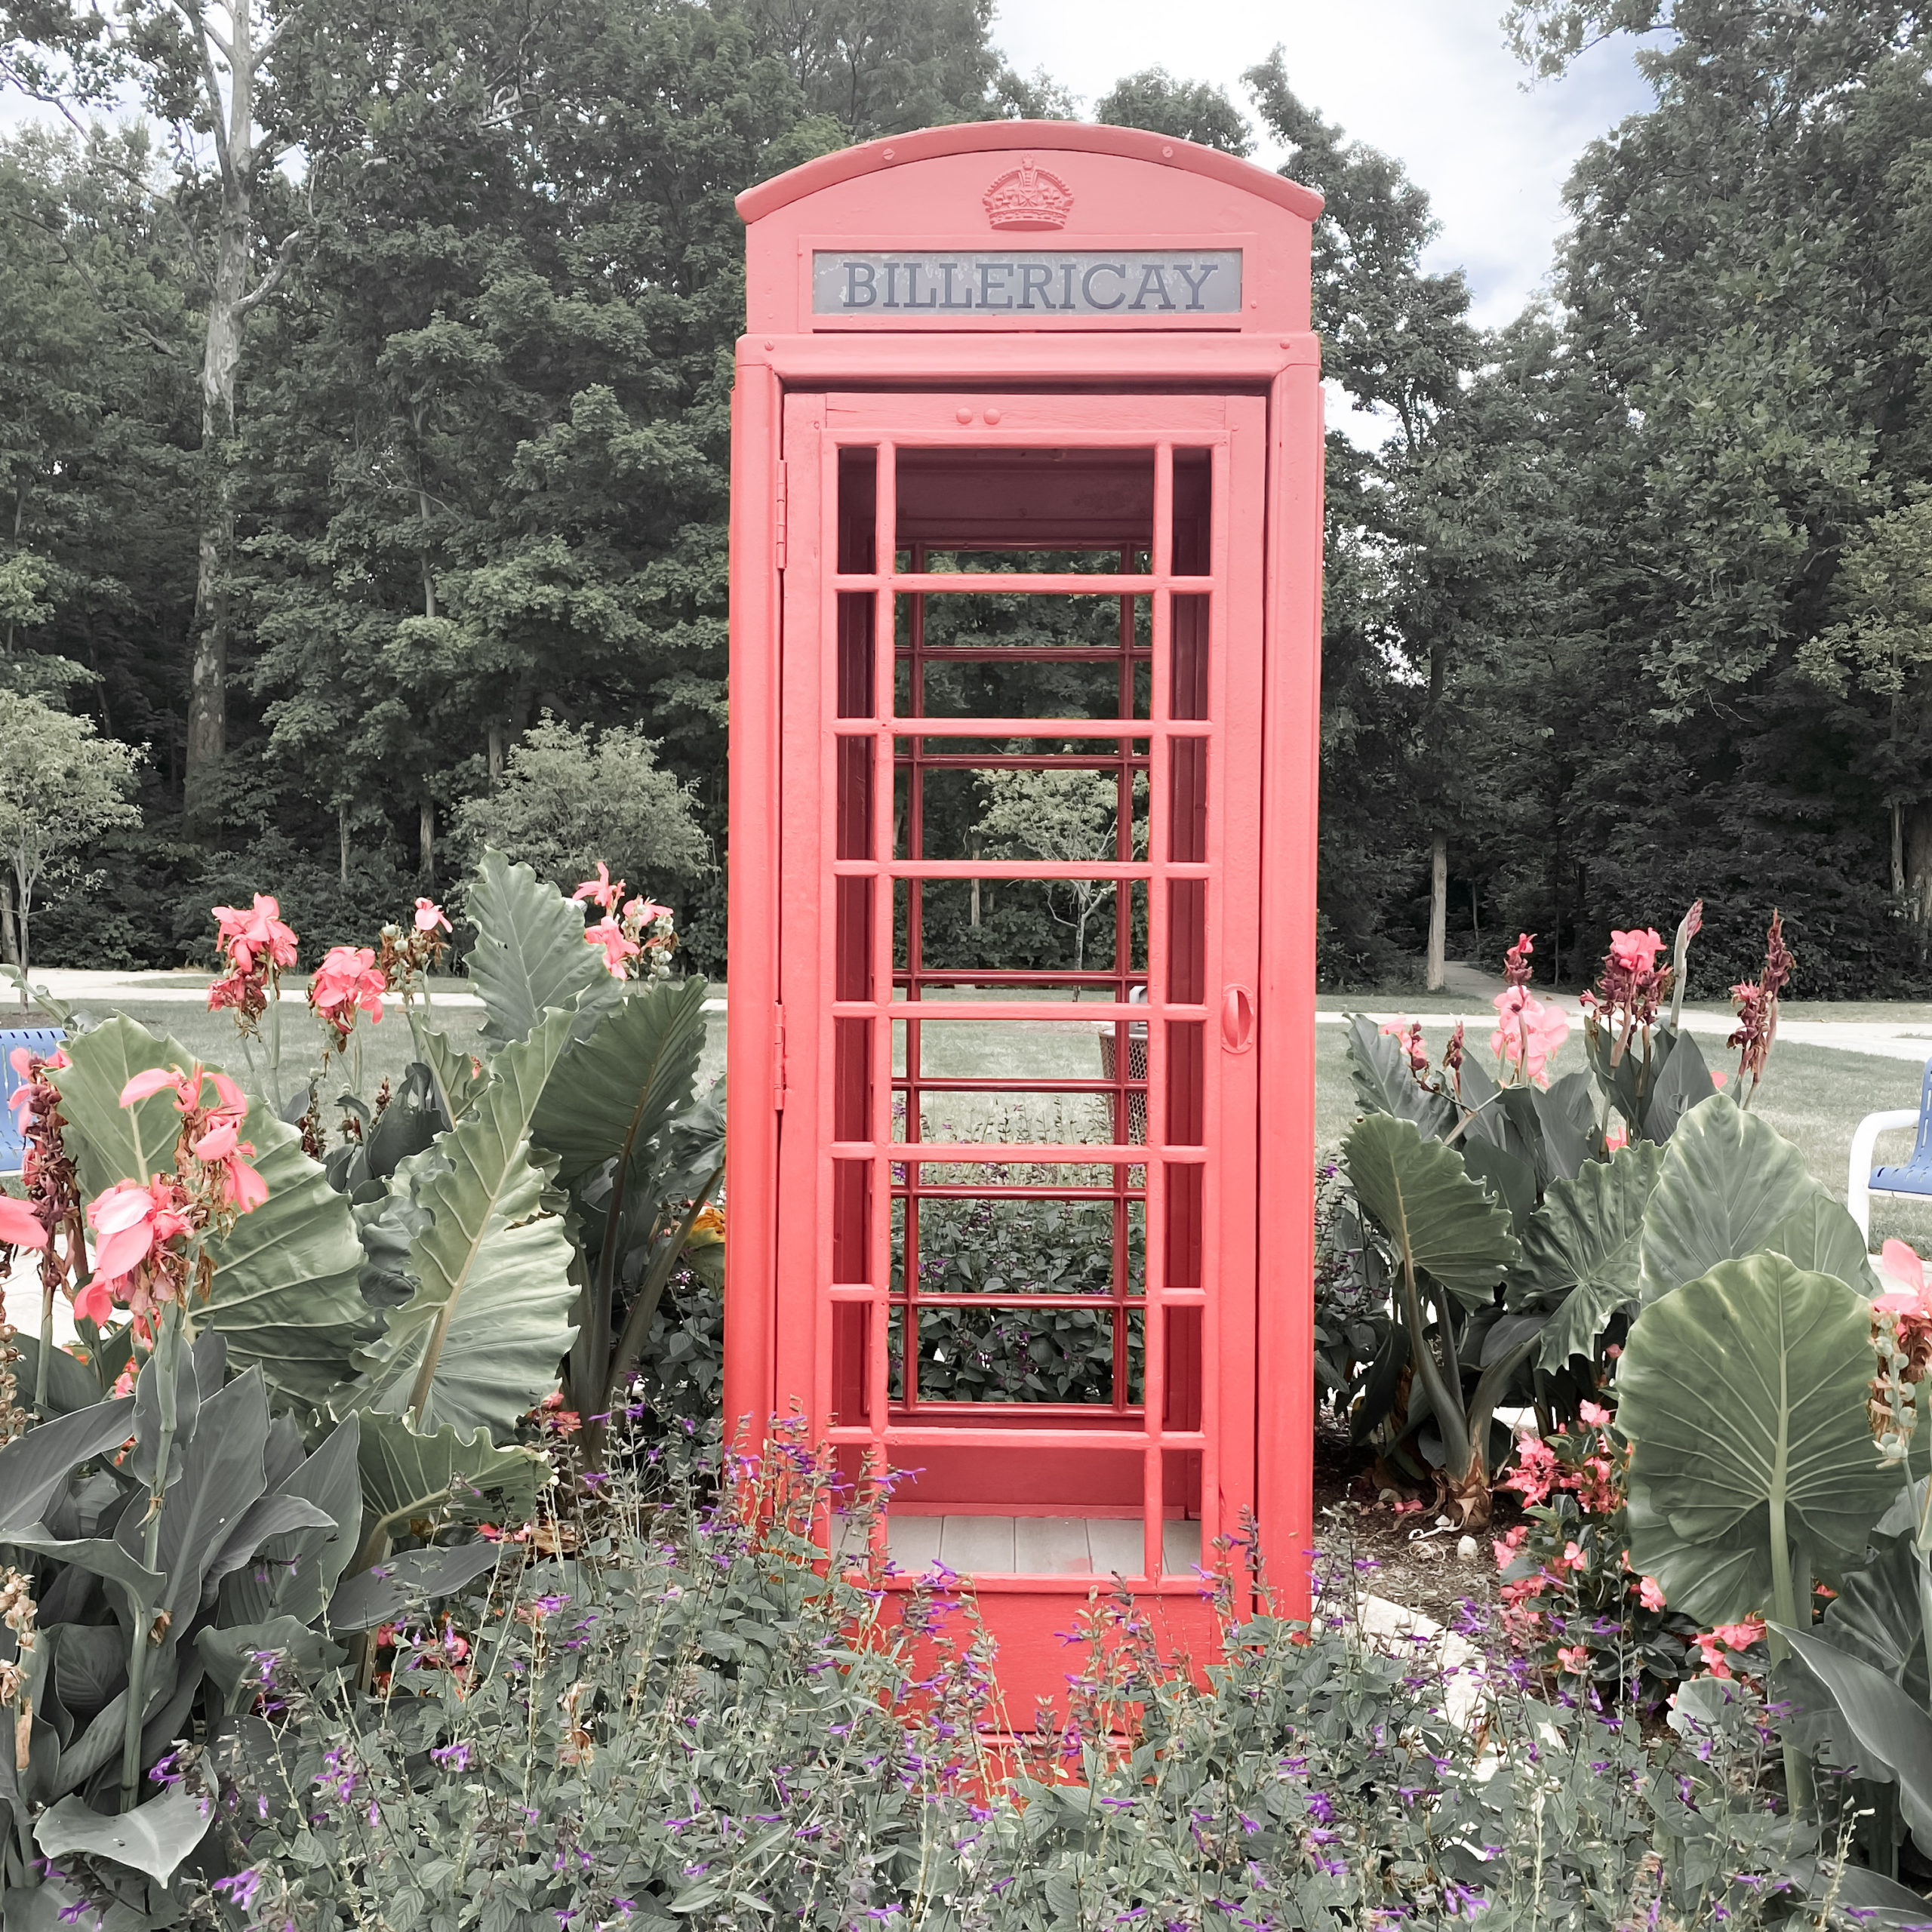 billericay park phone booth